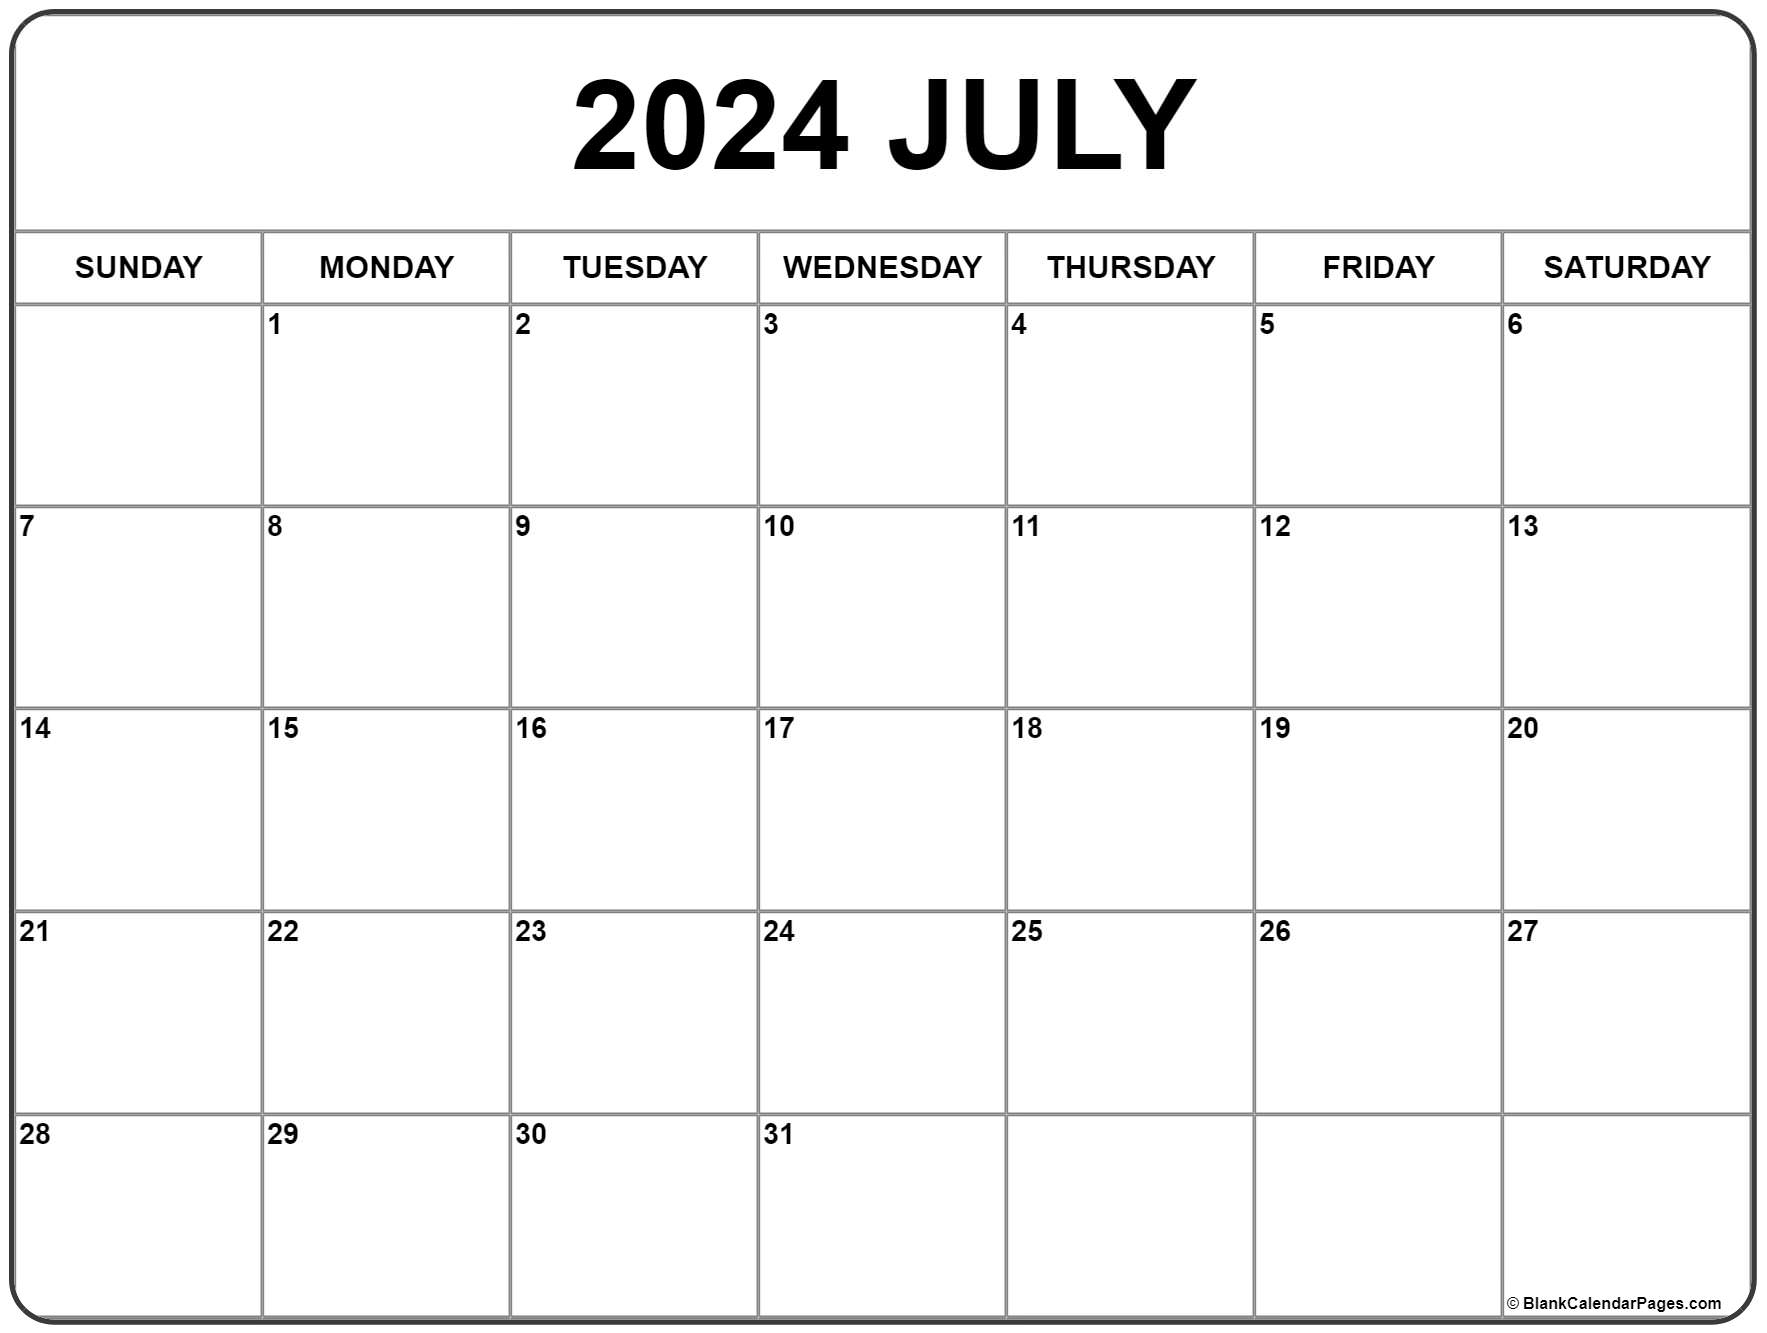 2021 July Calendar July 2021 calendar | free printable monthly calendars